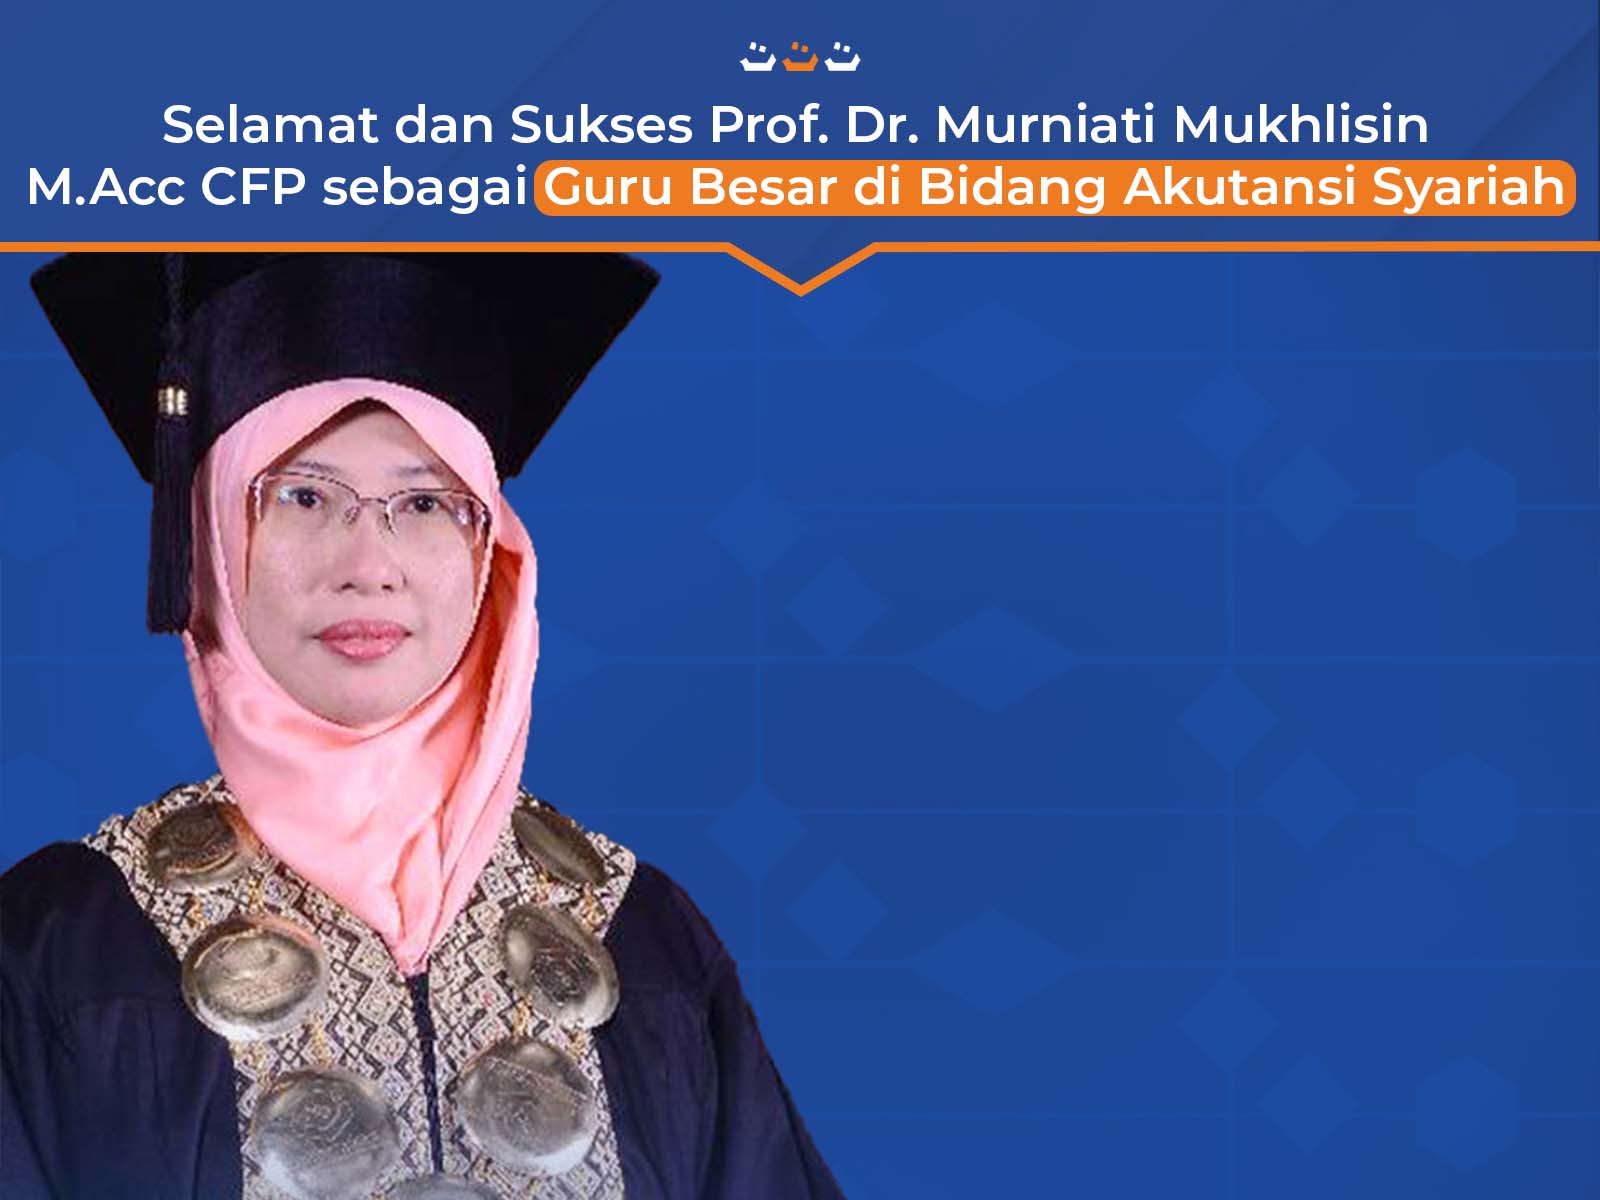 Selamat dan Sukses Prof. Dr. Murniati Mukhlisin M.Acc CFP sebagai Guru Besar di Bidang Akutansi Syariah